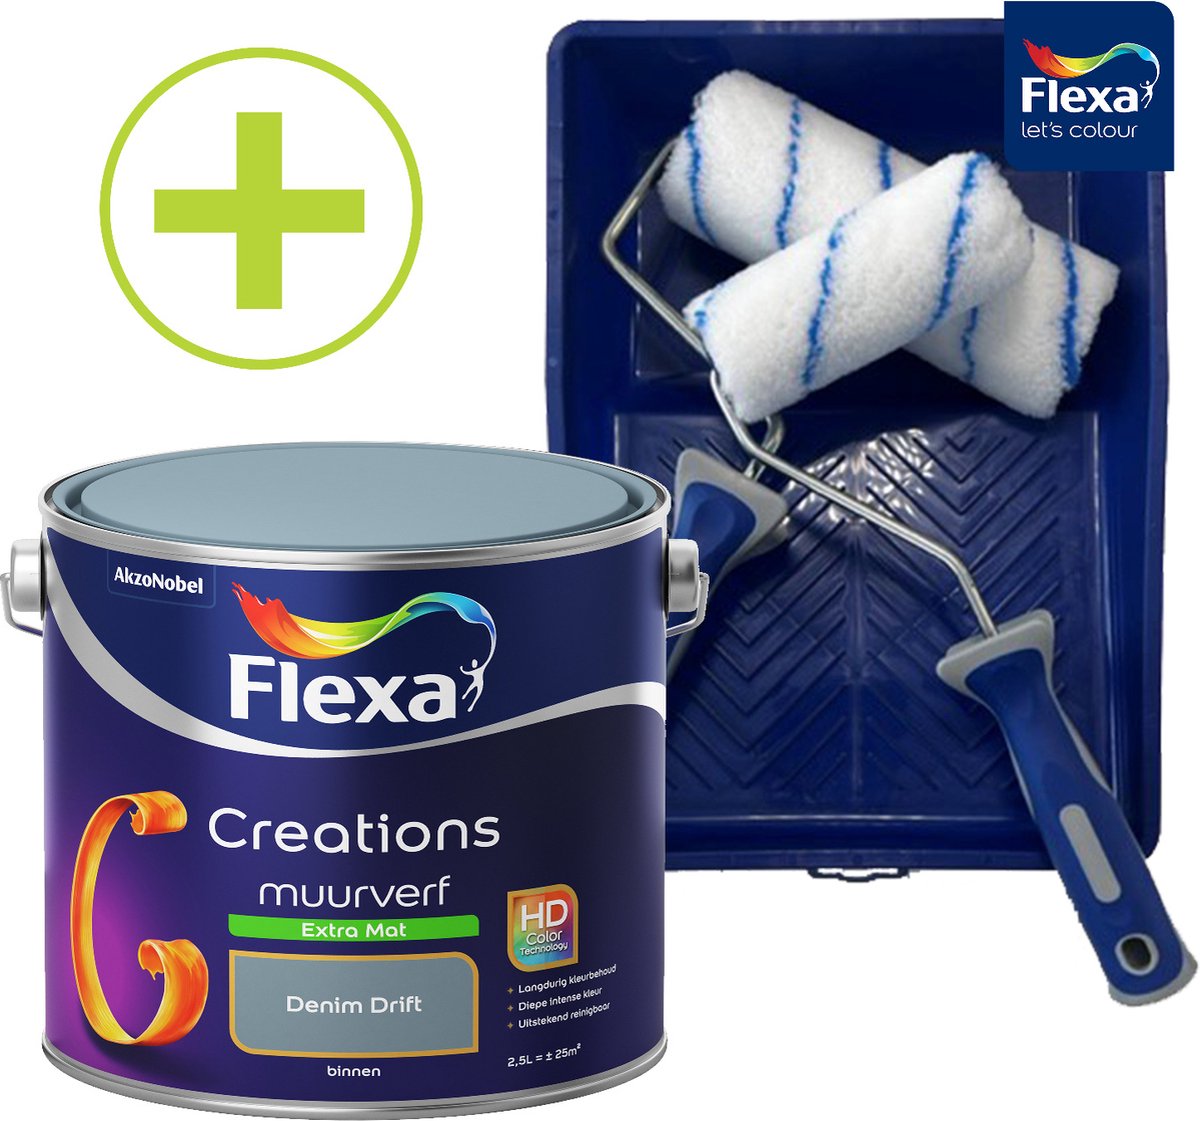 Flexa Creations Muurverf - Extra Mat - Denim Drift - Blauw - 2,5 liter + Flexa Muurverfset 5-delig